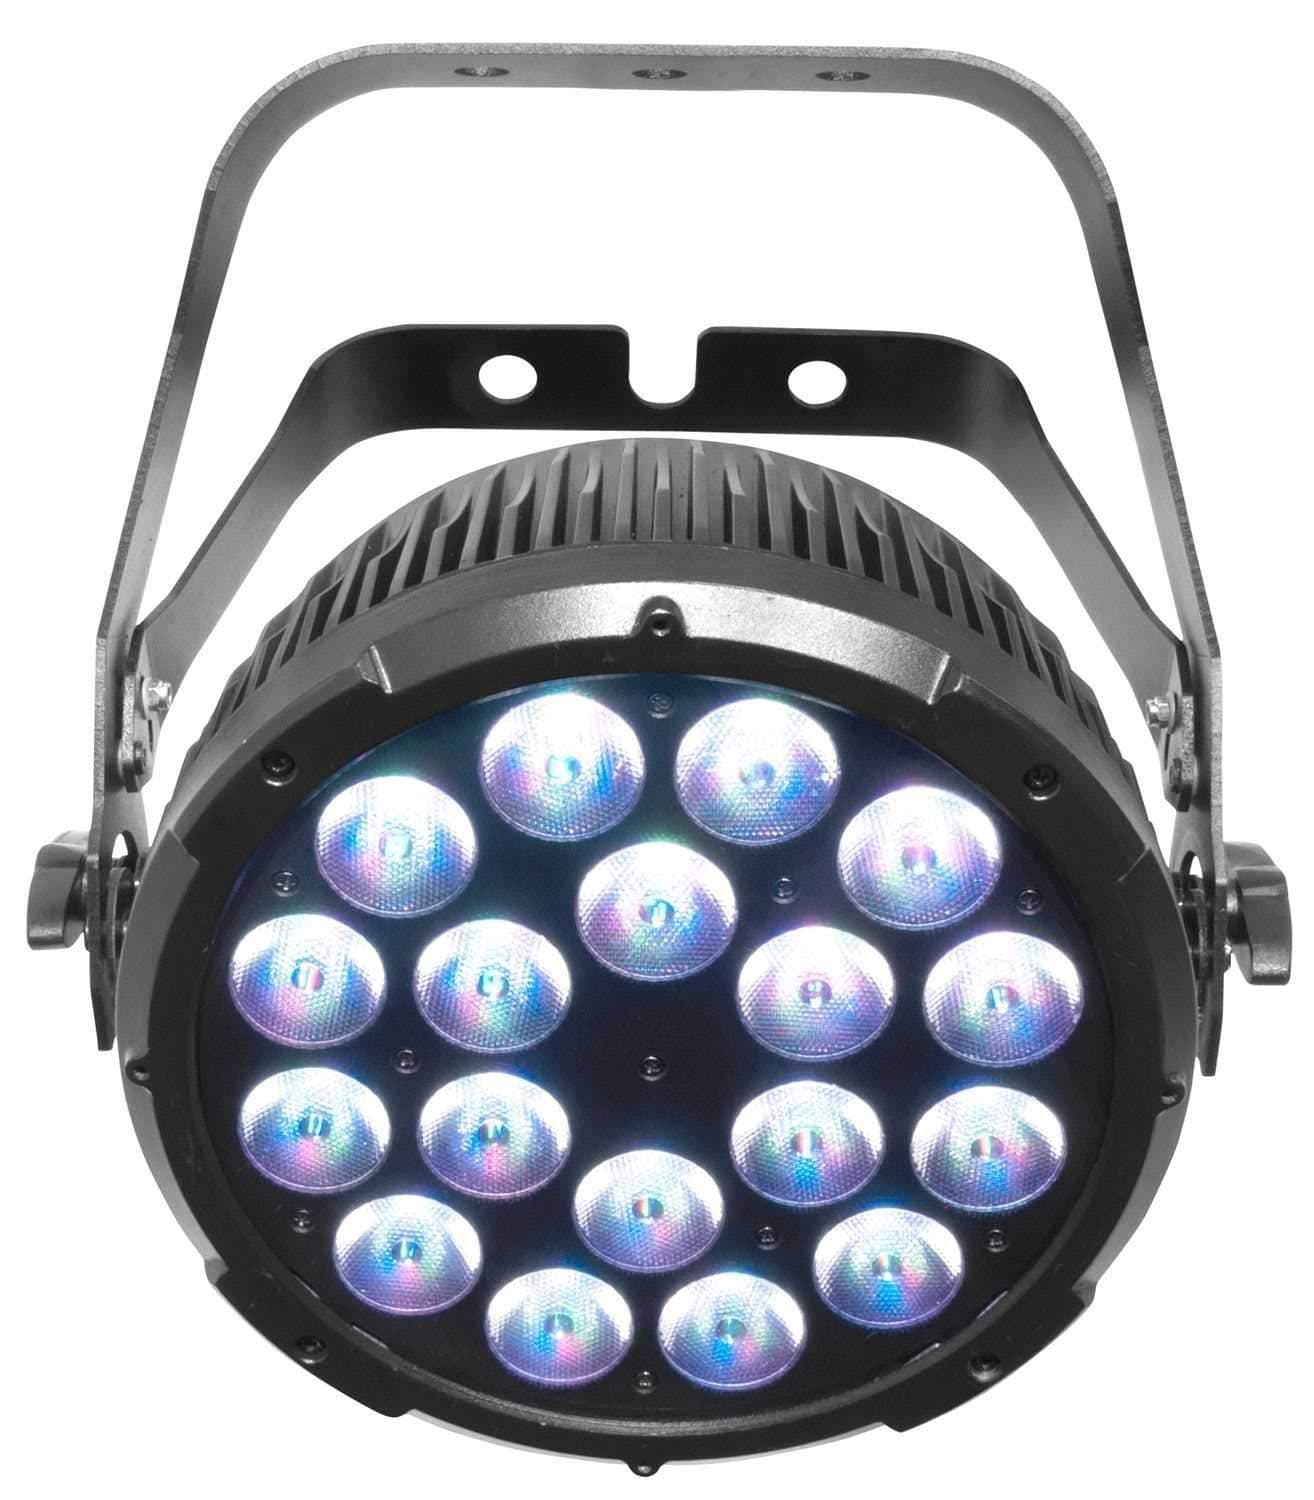 Chauvet COLORdash Par-Quad 18 RGBA LED Fixture - ProSound and Stage Lighting